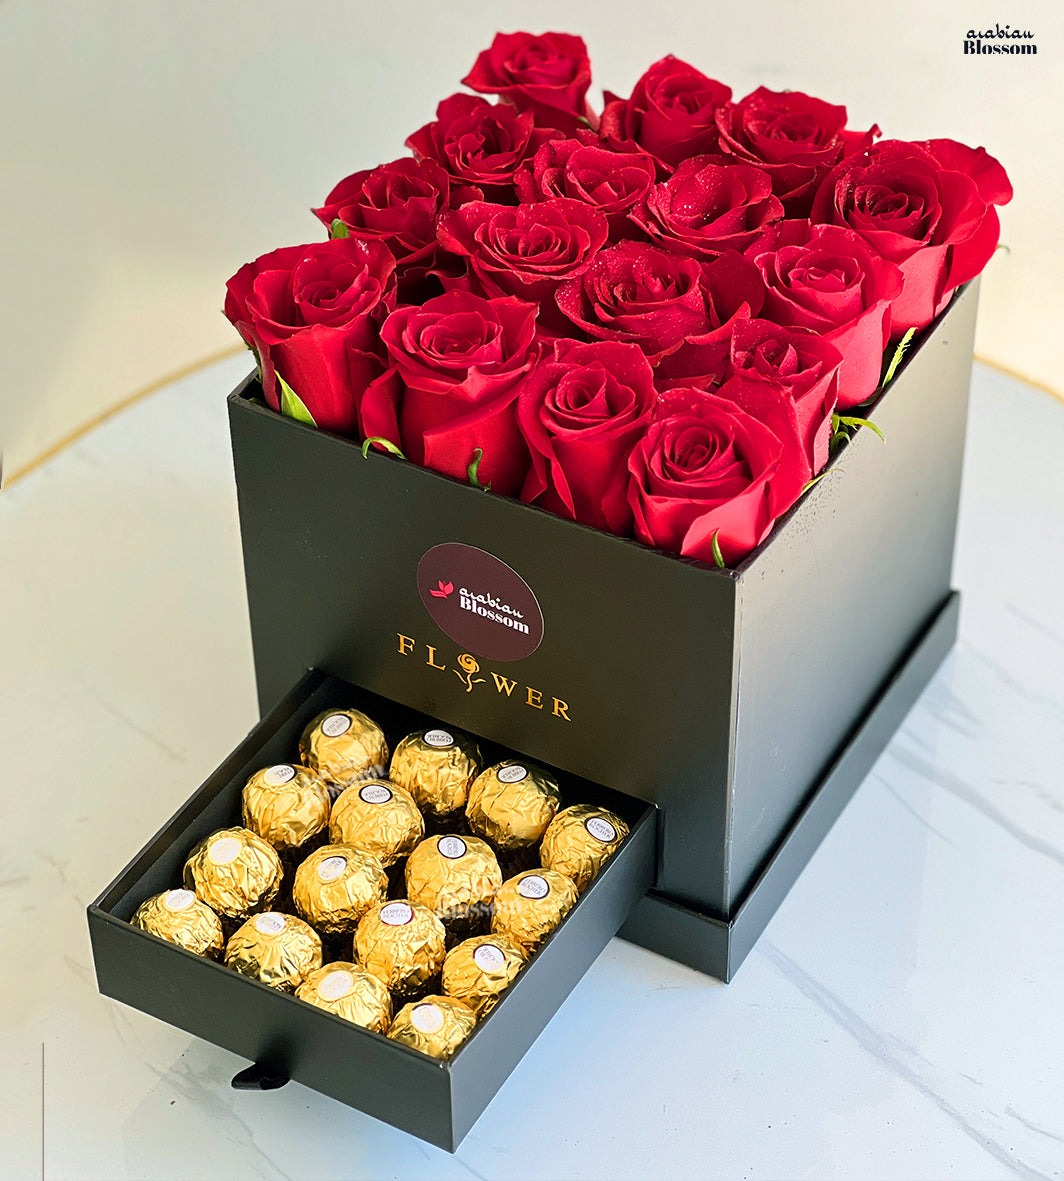 Online Birthday, Christmas, Sympathy Flower Delivery Shops, Cheap UAE